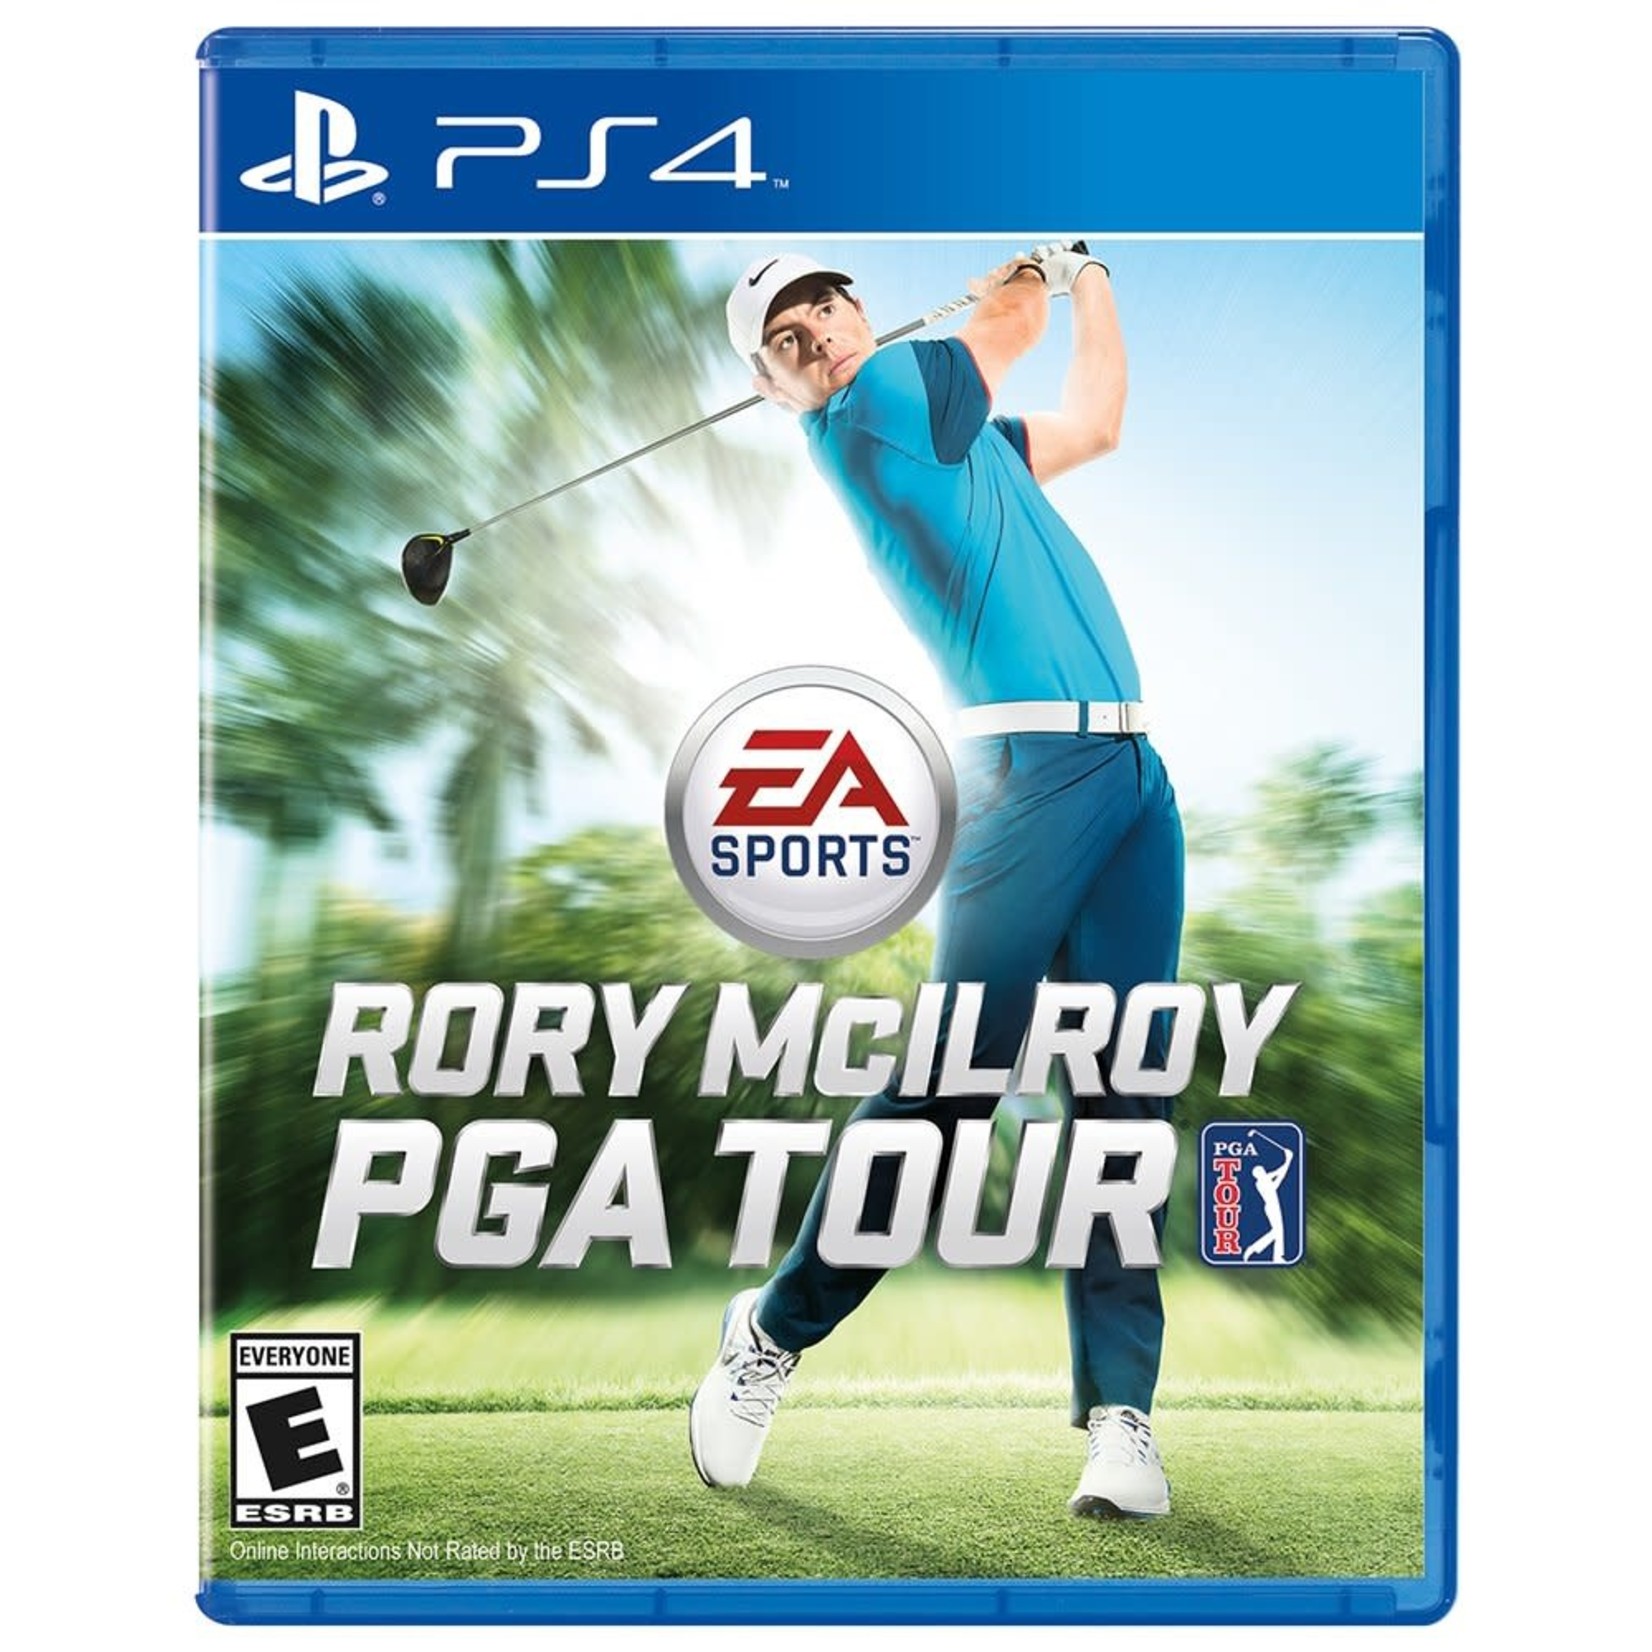 PS4U-EA SPORTS Rory McIlroy PGA Tour